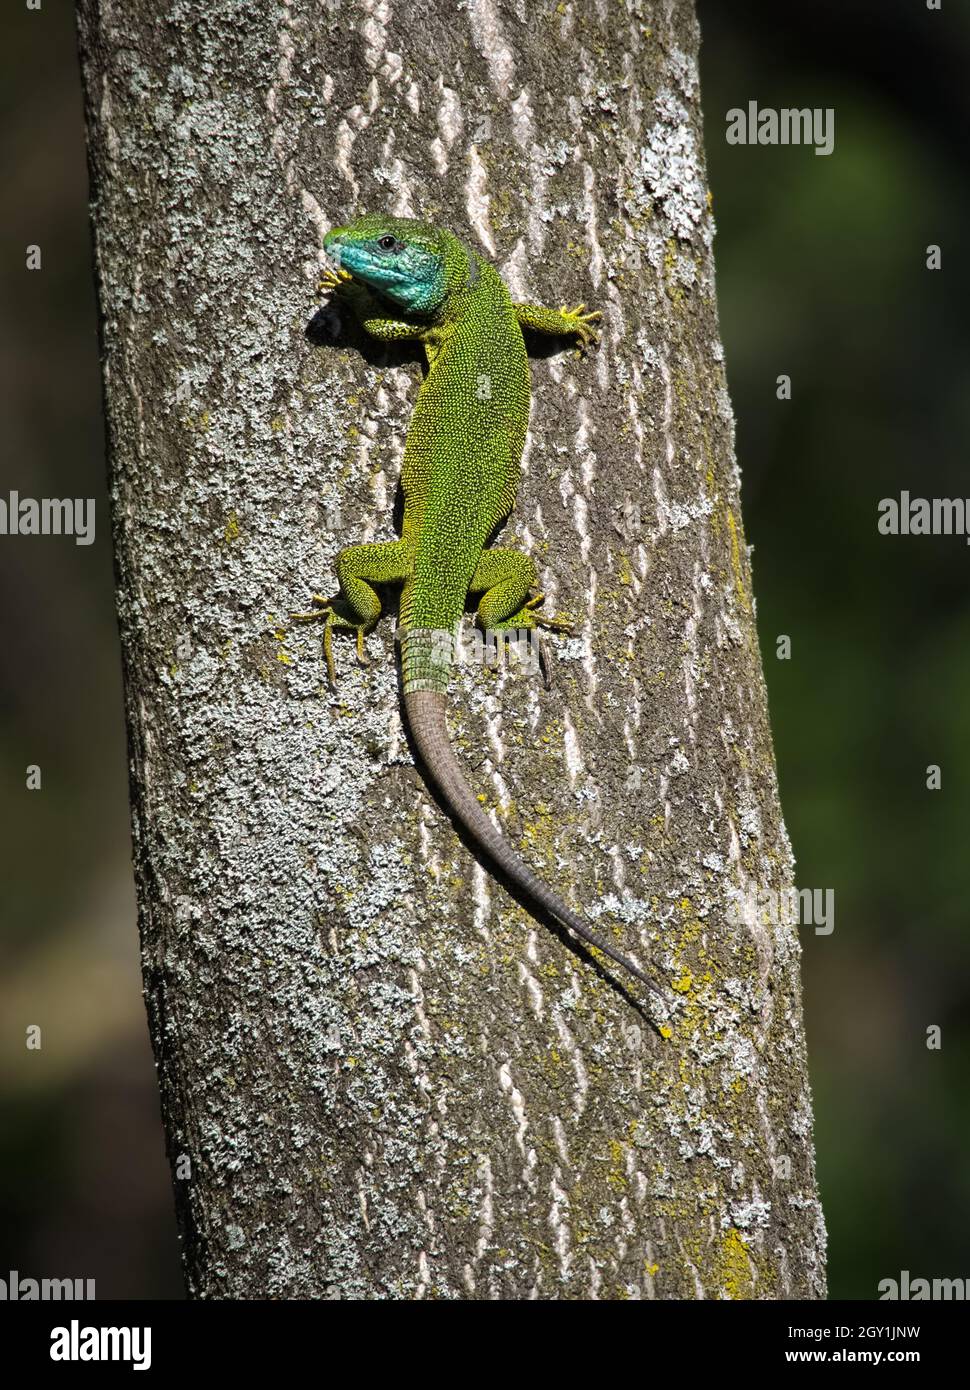 European Green Lizard Male on a Tree Trunk Stock Photo